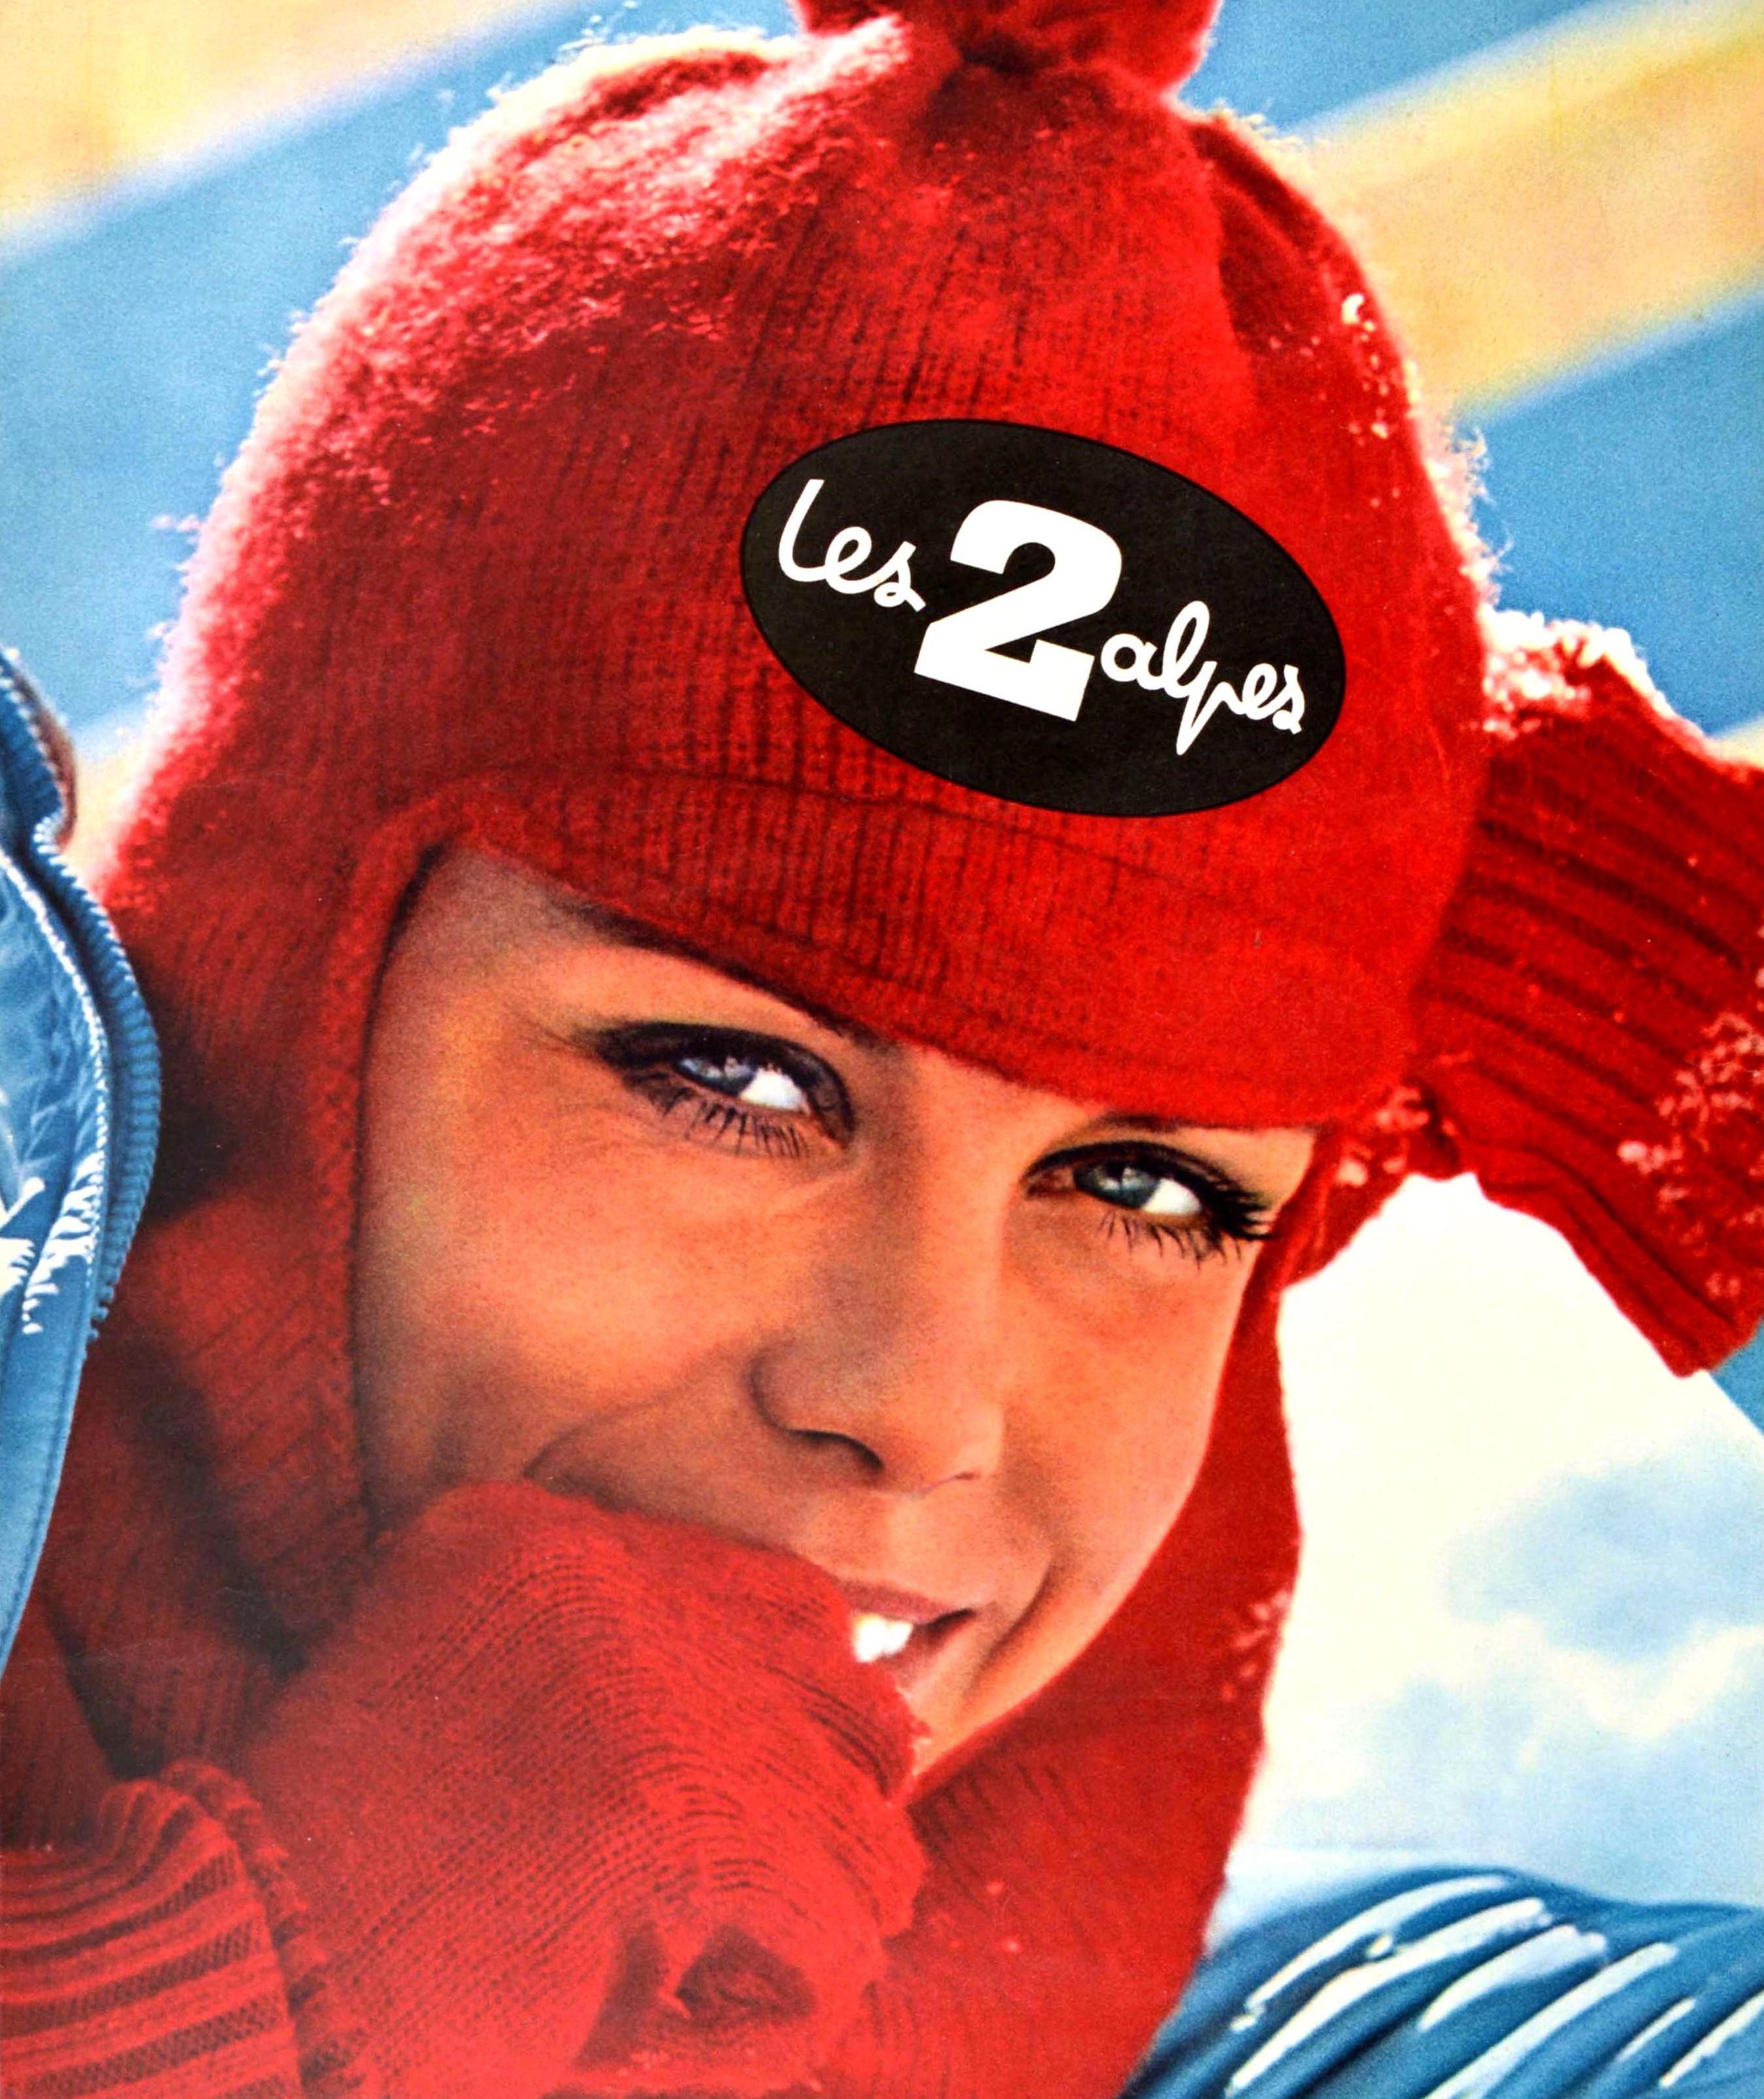 French Original Vintage Poster Les Deux Alpes Isere France Skiing Winter Sport Travel For Sale